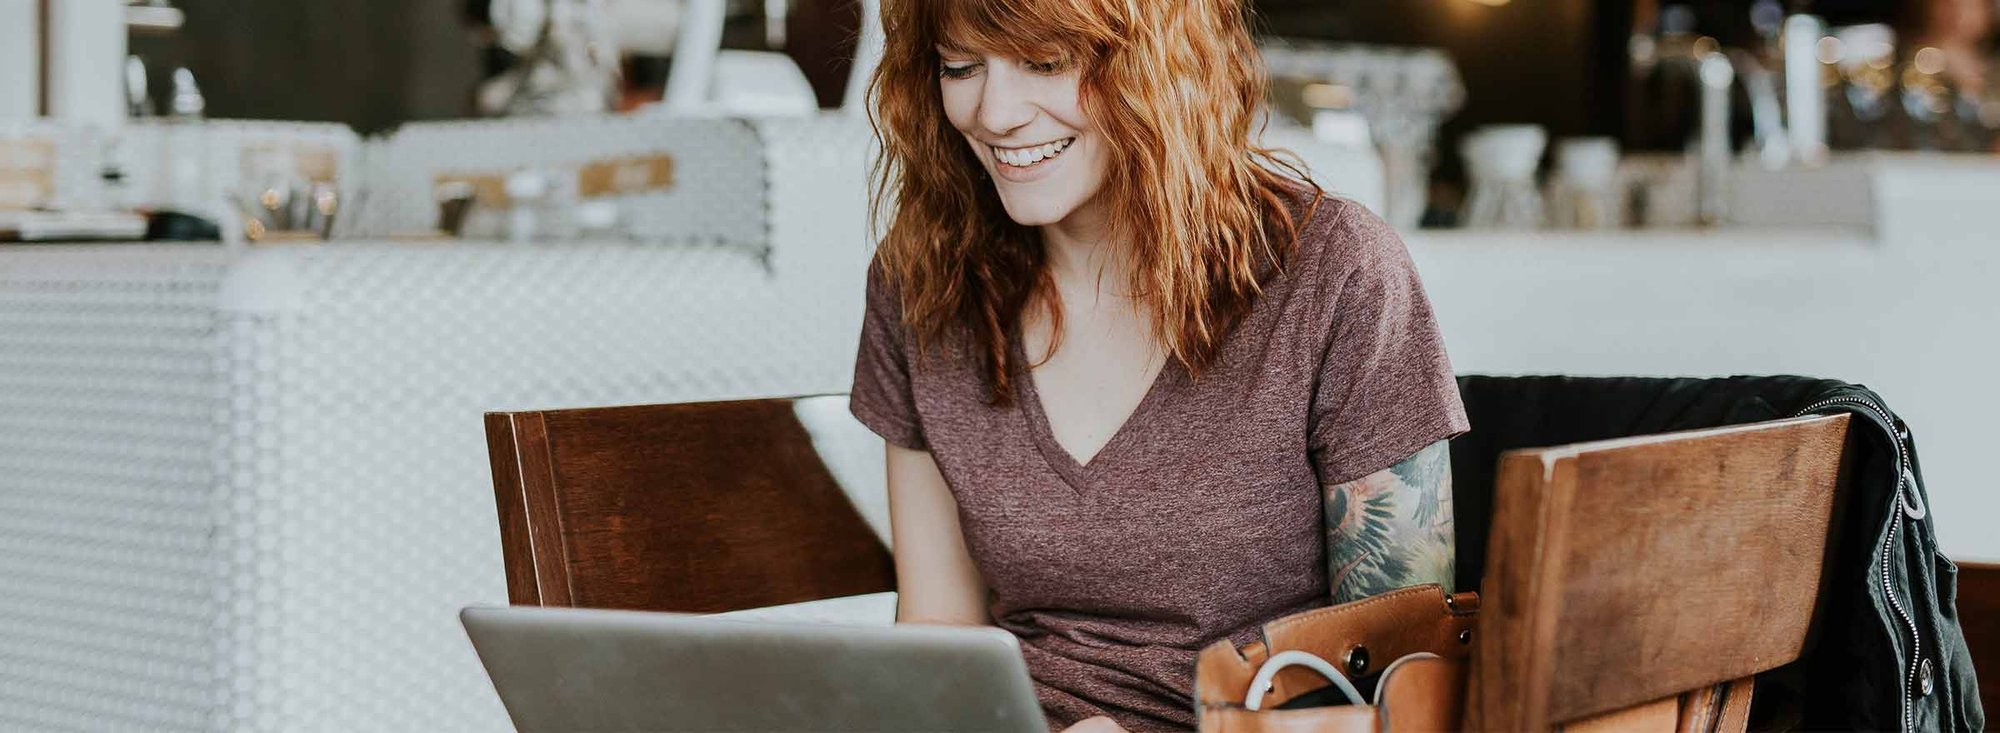 woman smiling at laptop screen